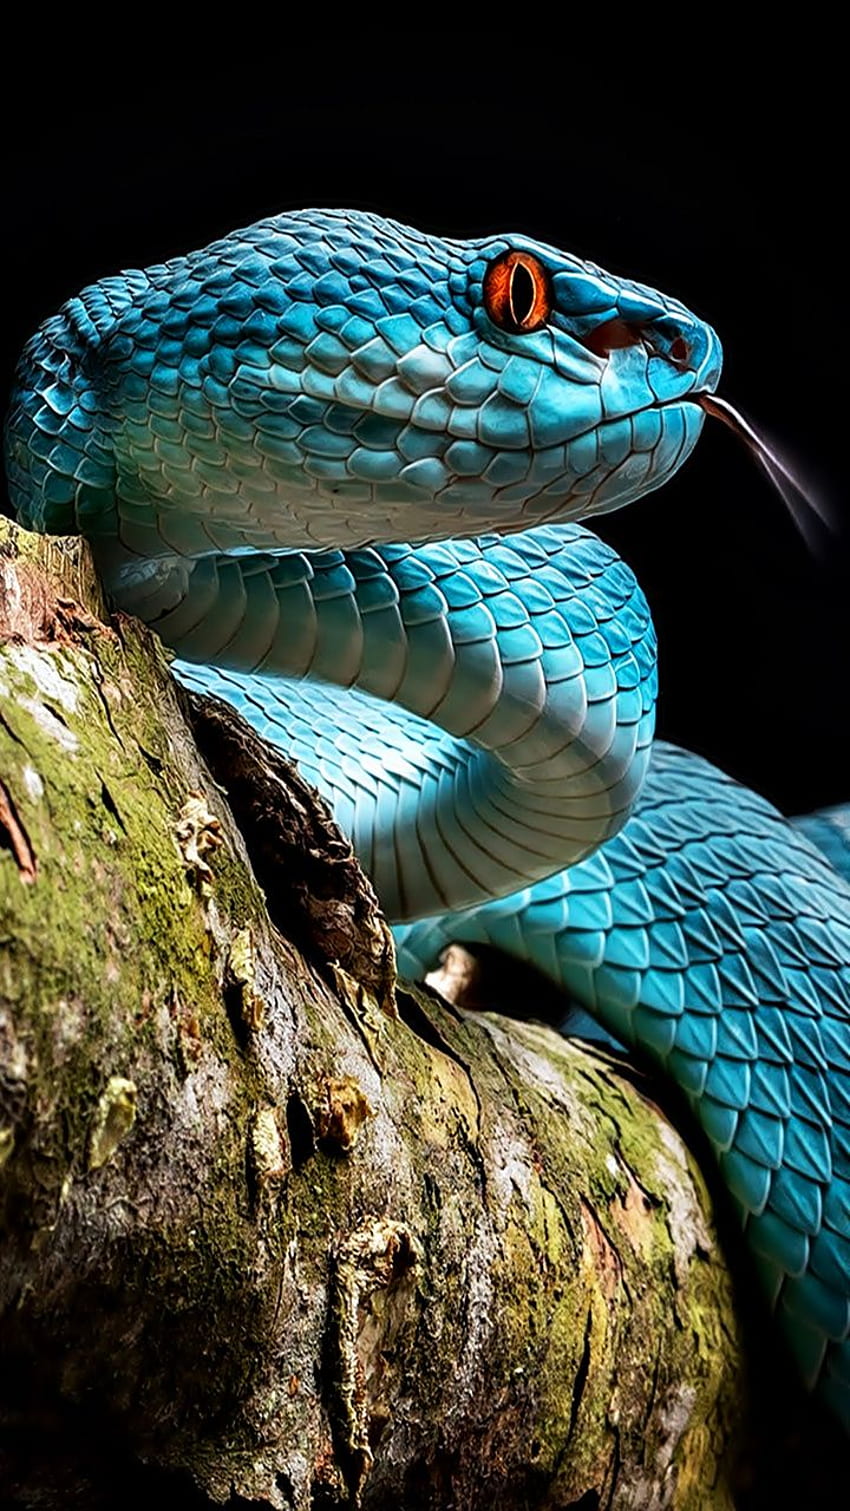 Snake Blue Pit Viper - & Plano de fundo, Viper Snake iPhone Papel de parede de celular HD